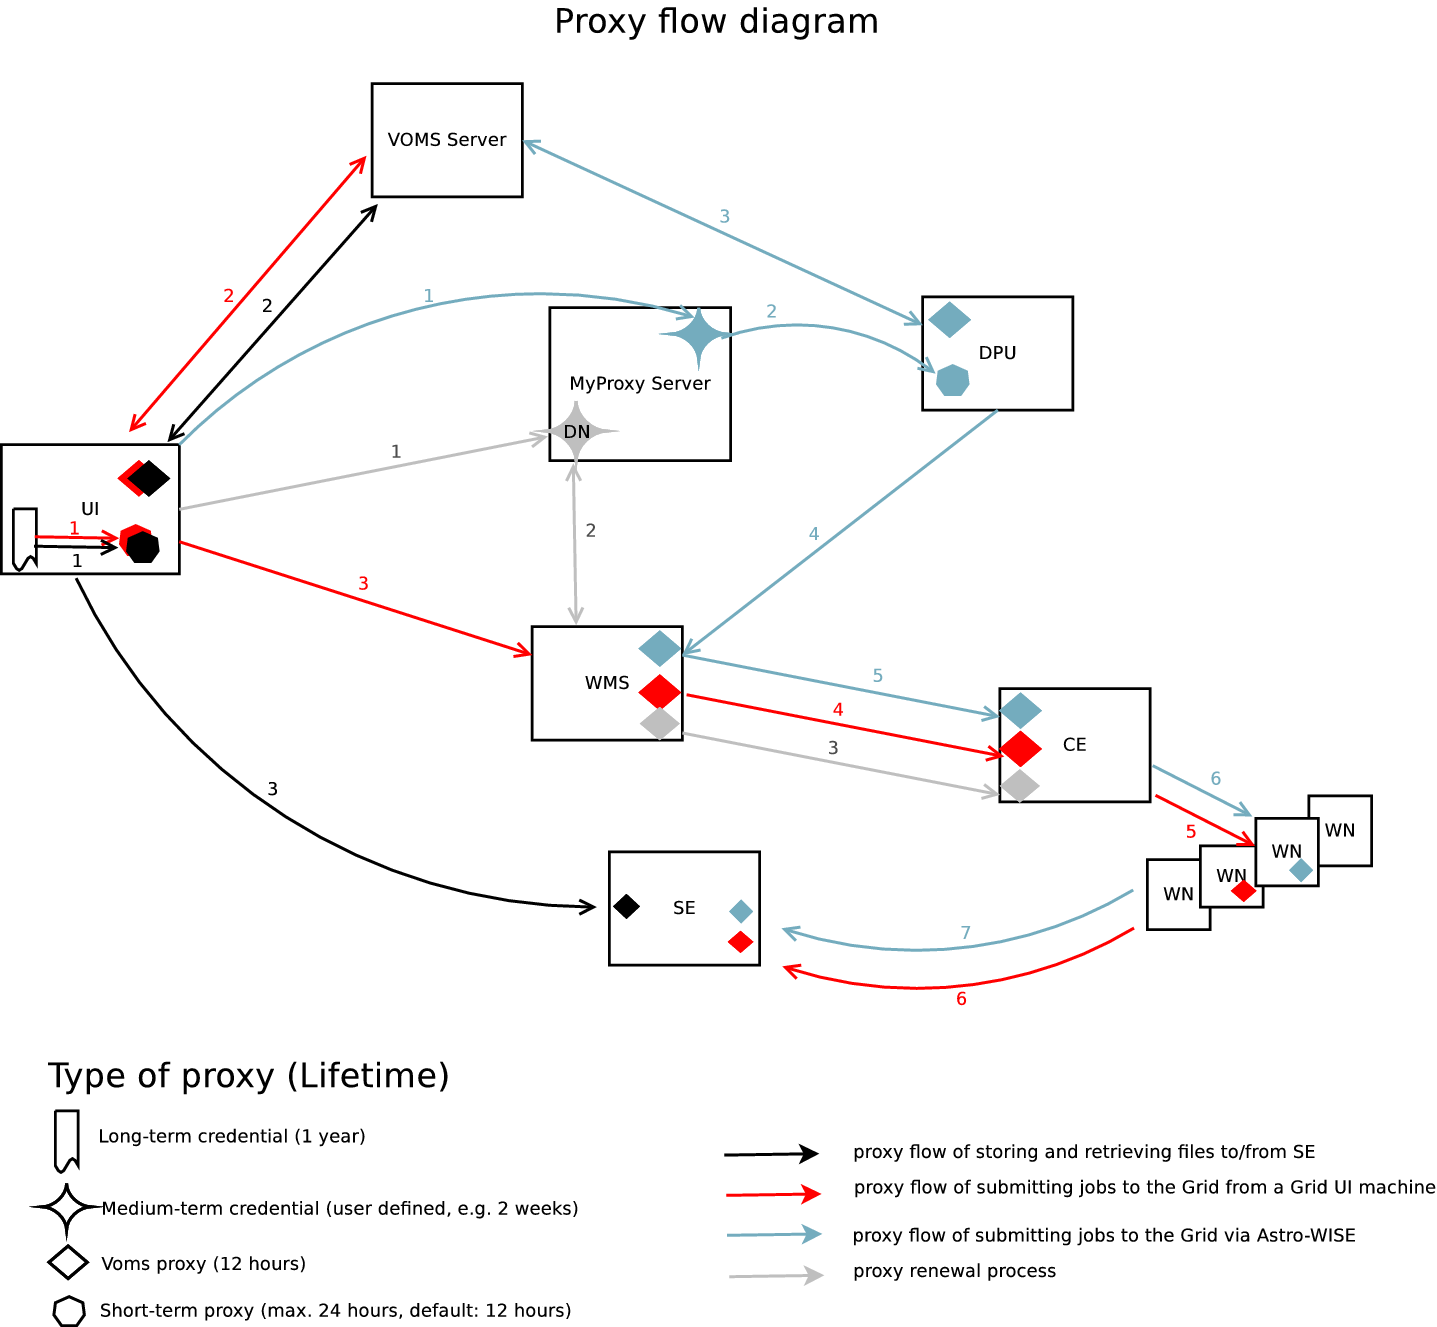 Proxy flow diagram